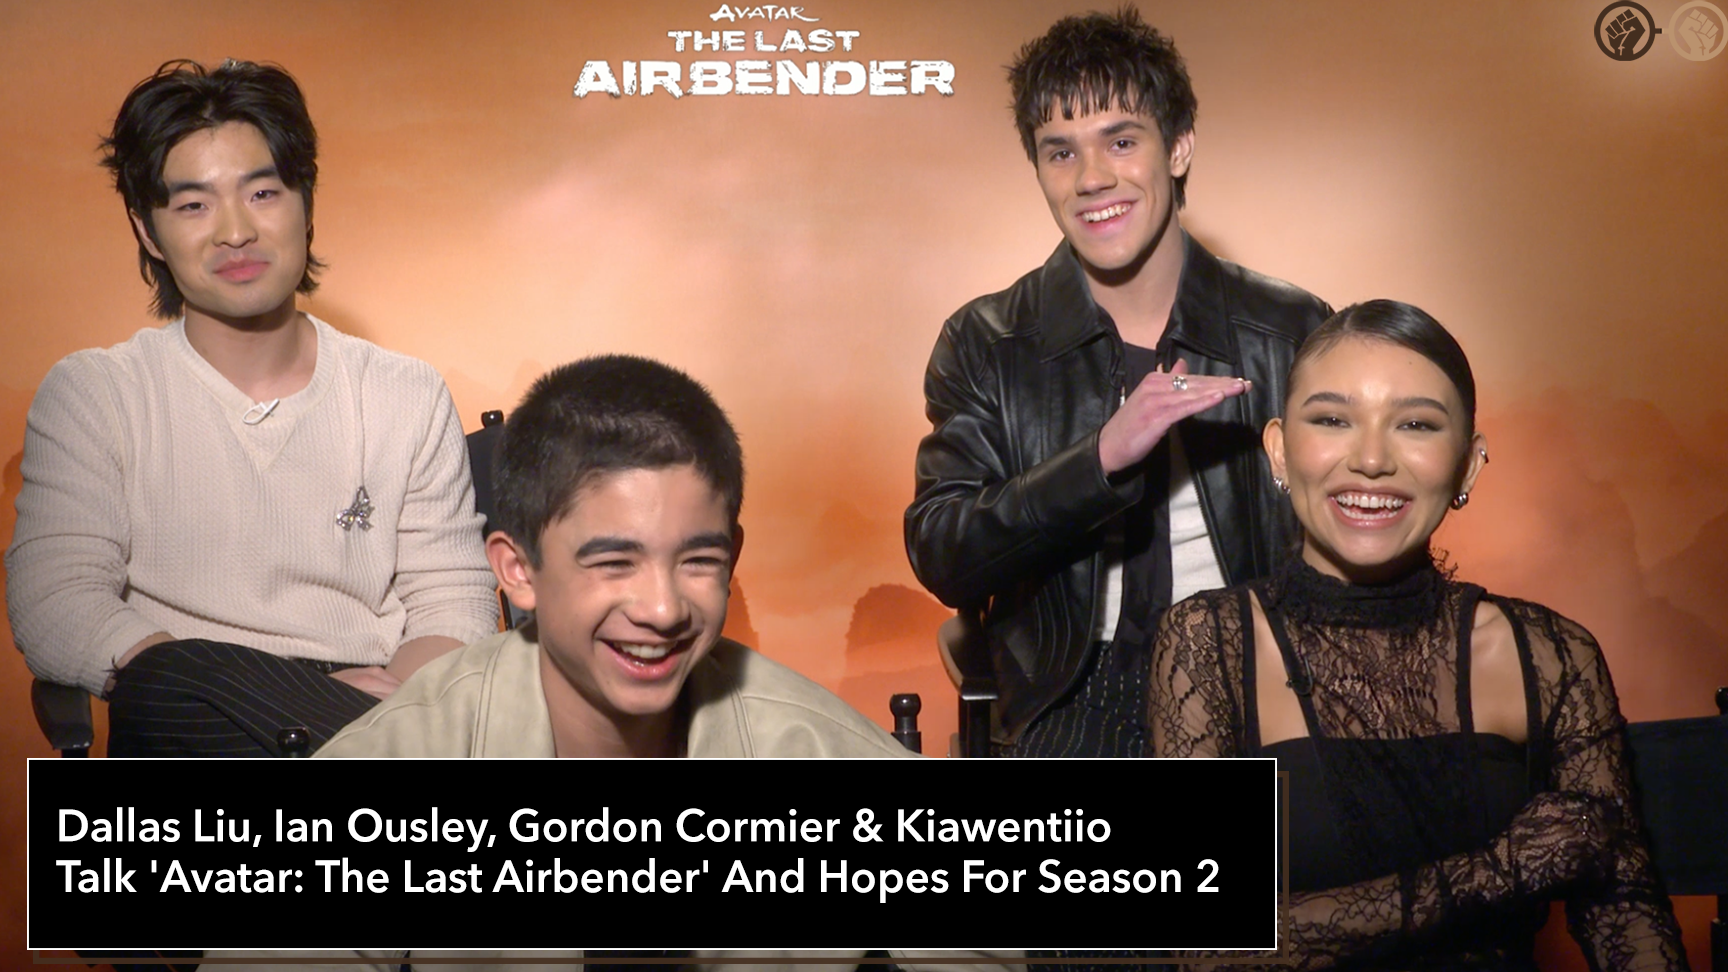 Dallas Liu, Ian Ousley, Gordon Cormier & Kiawentiio Talk ‘Avatar: The Last Airbender’ And Hopes For Season 2 – Interview